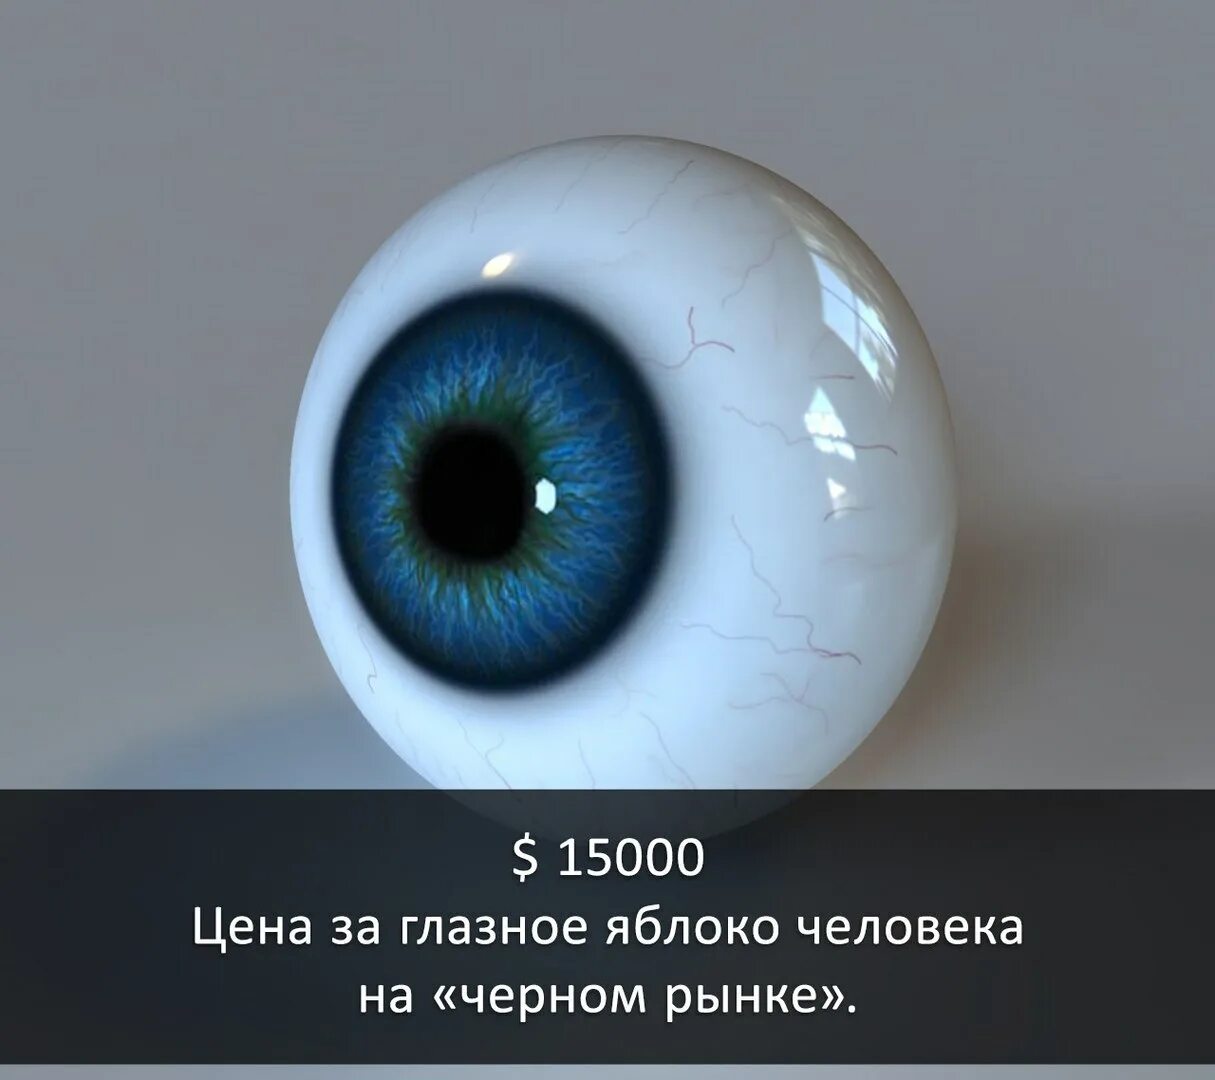 Глаз человека цена. Диаметр глазного яблока. Размер глазного яблока человека. Диаметр глазного яблока взрослого человека. Диаметр человеческого глаза.